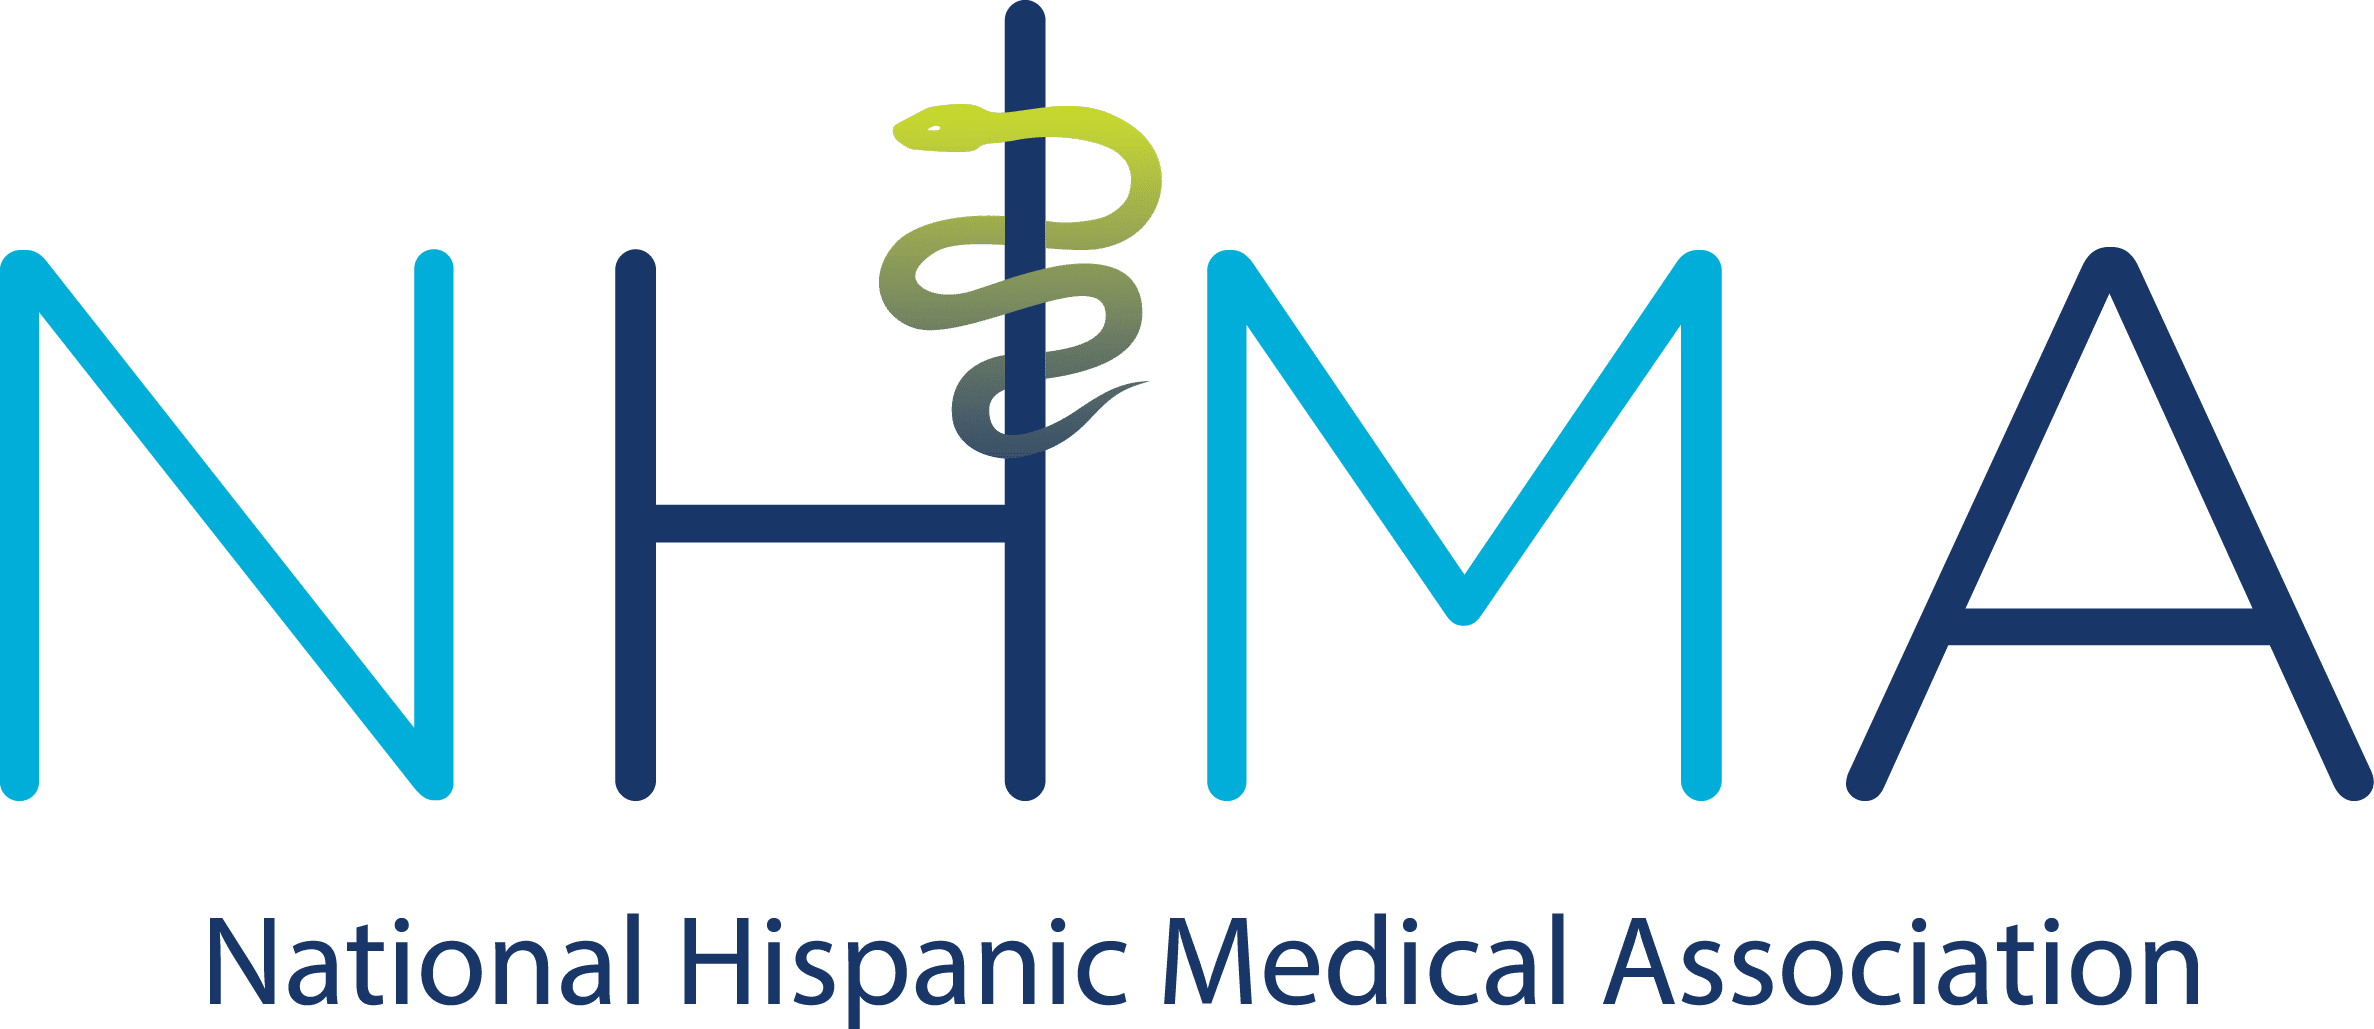 National Hispanic Medical Association logo.